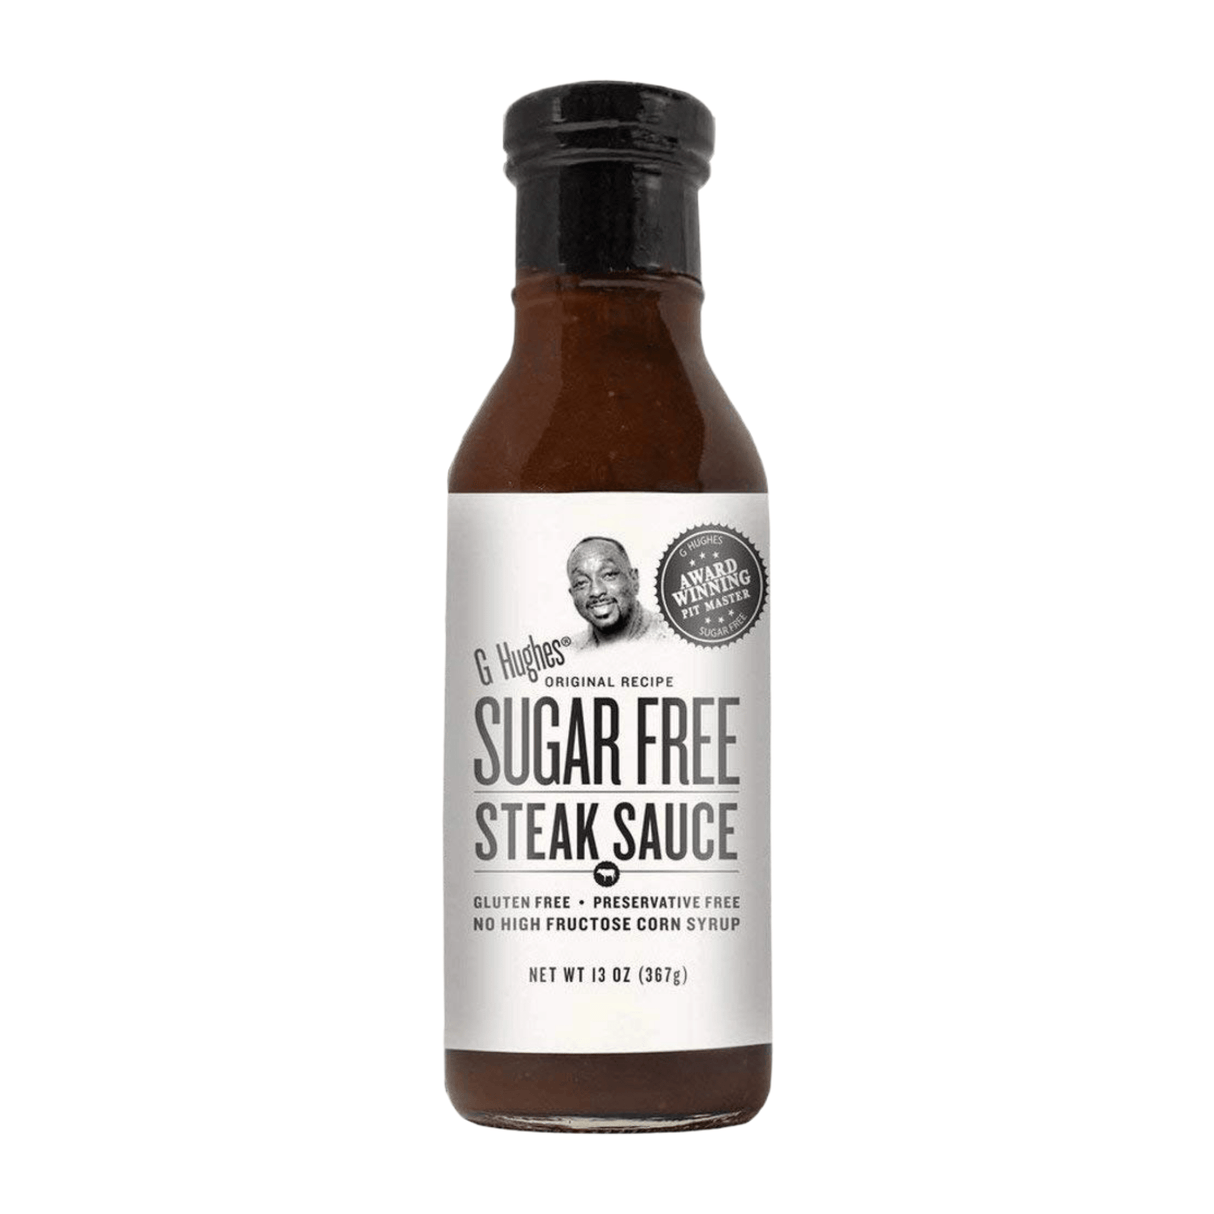 G Hughes Sugar Free Steak Sauce